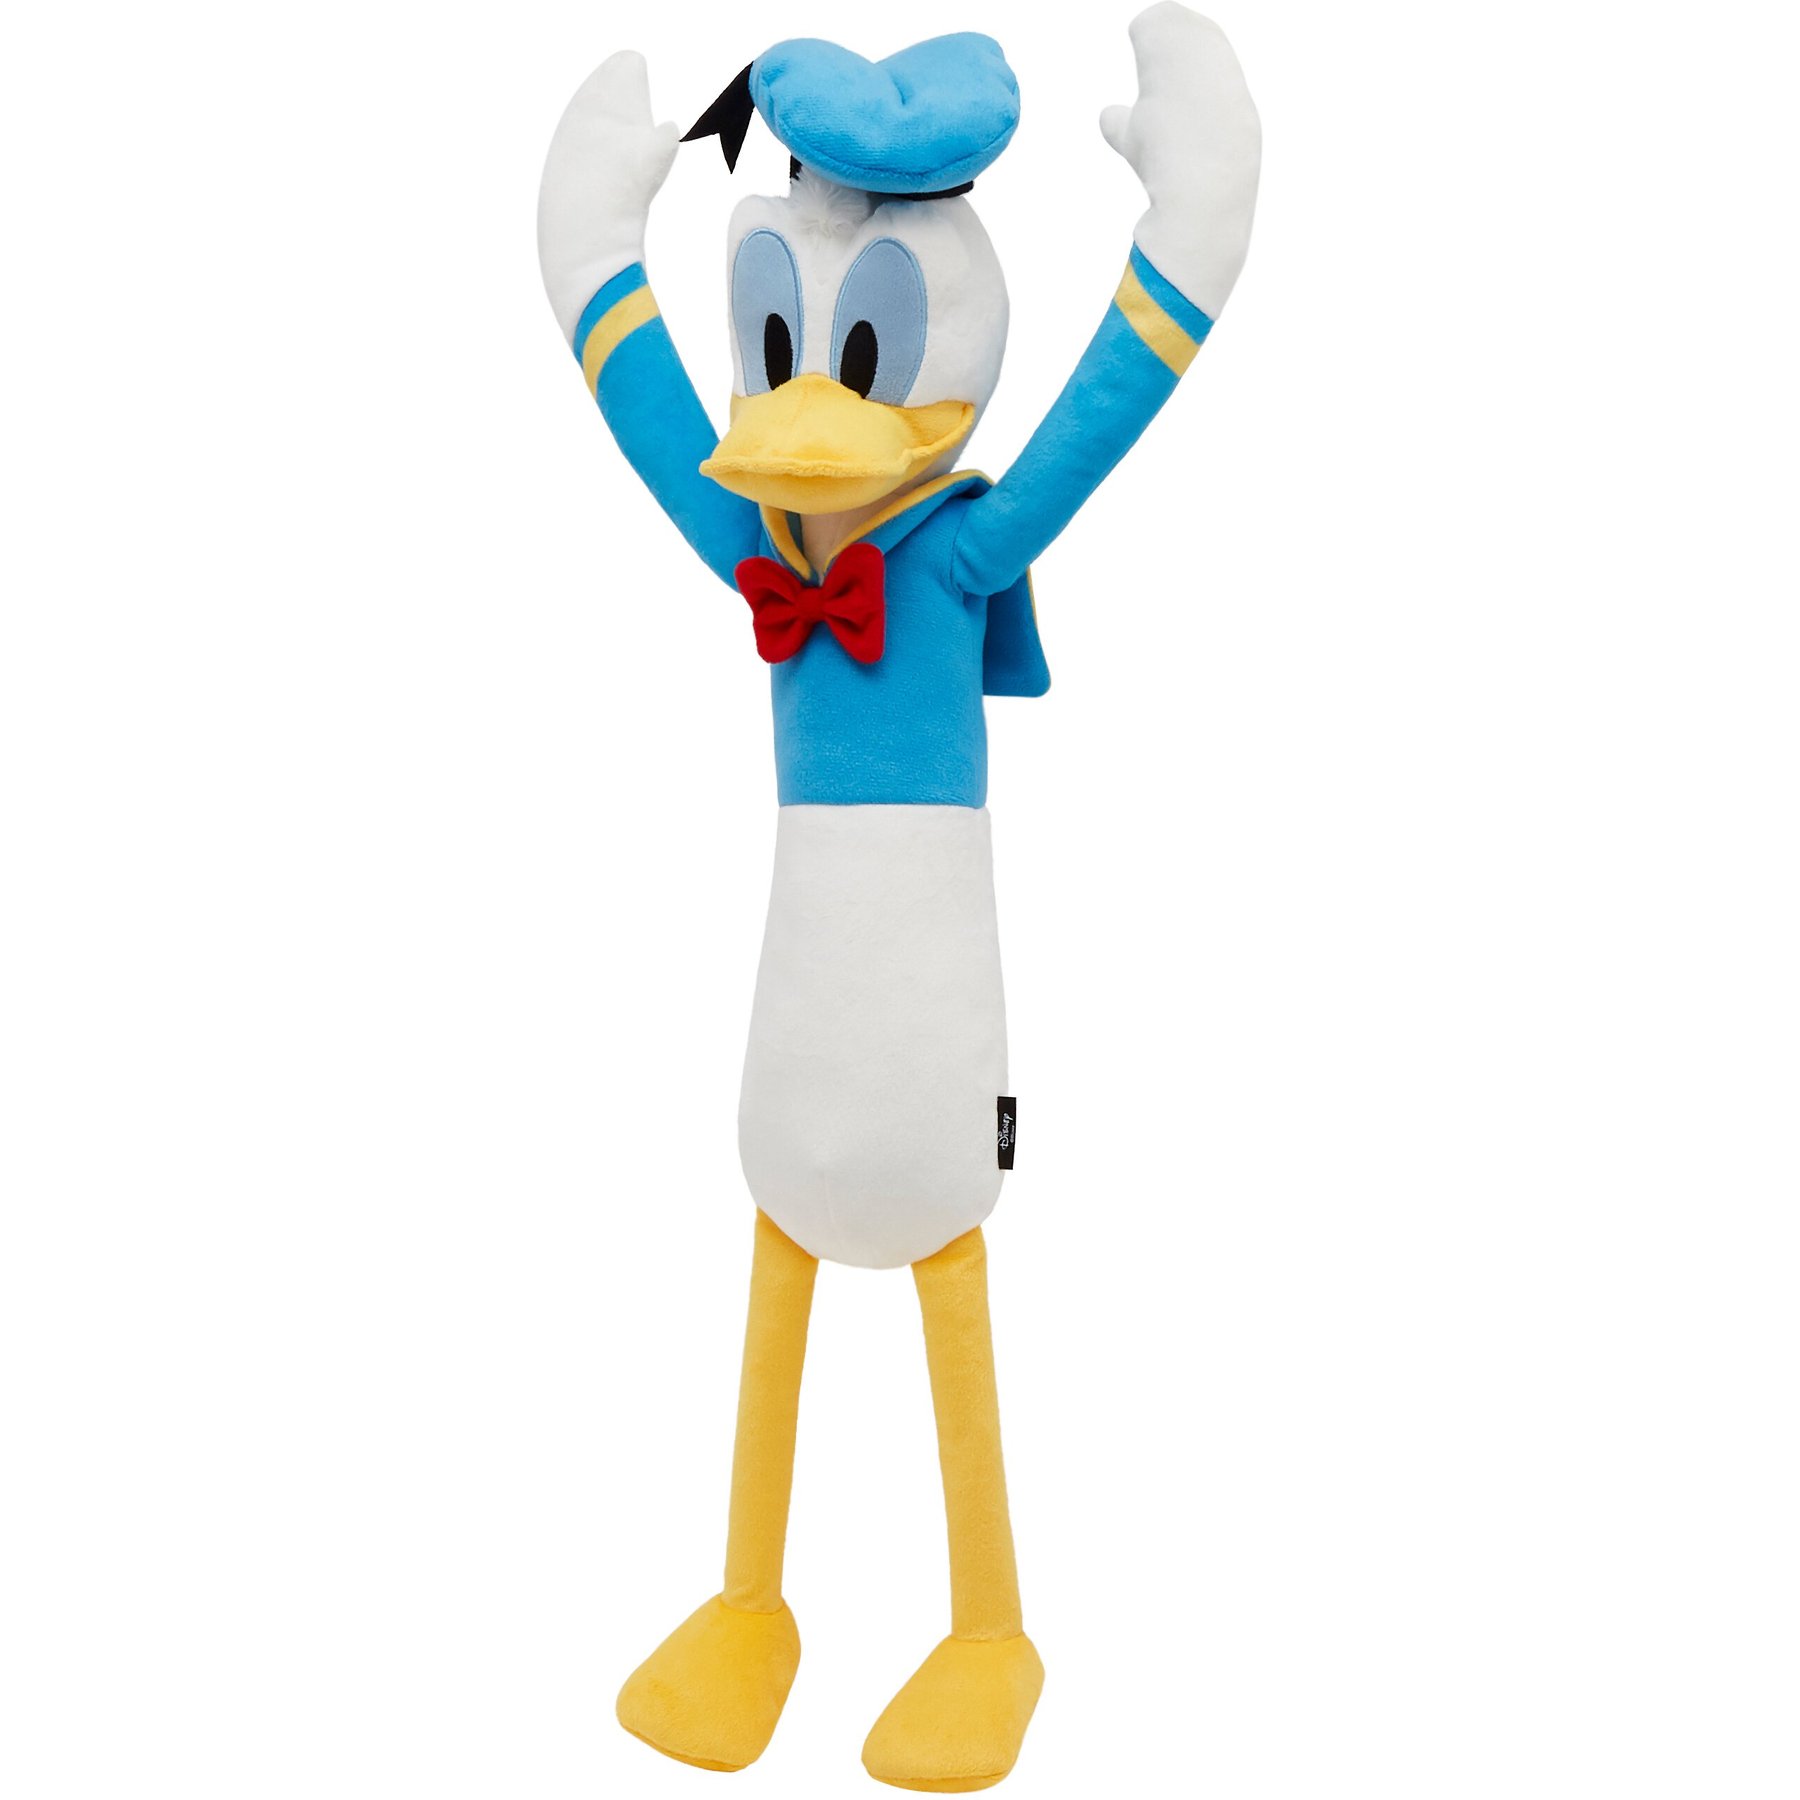 Disney Donald Duck Wagazoo Plush Squeaky Dog Toy, Extra Long